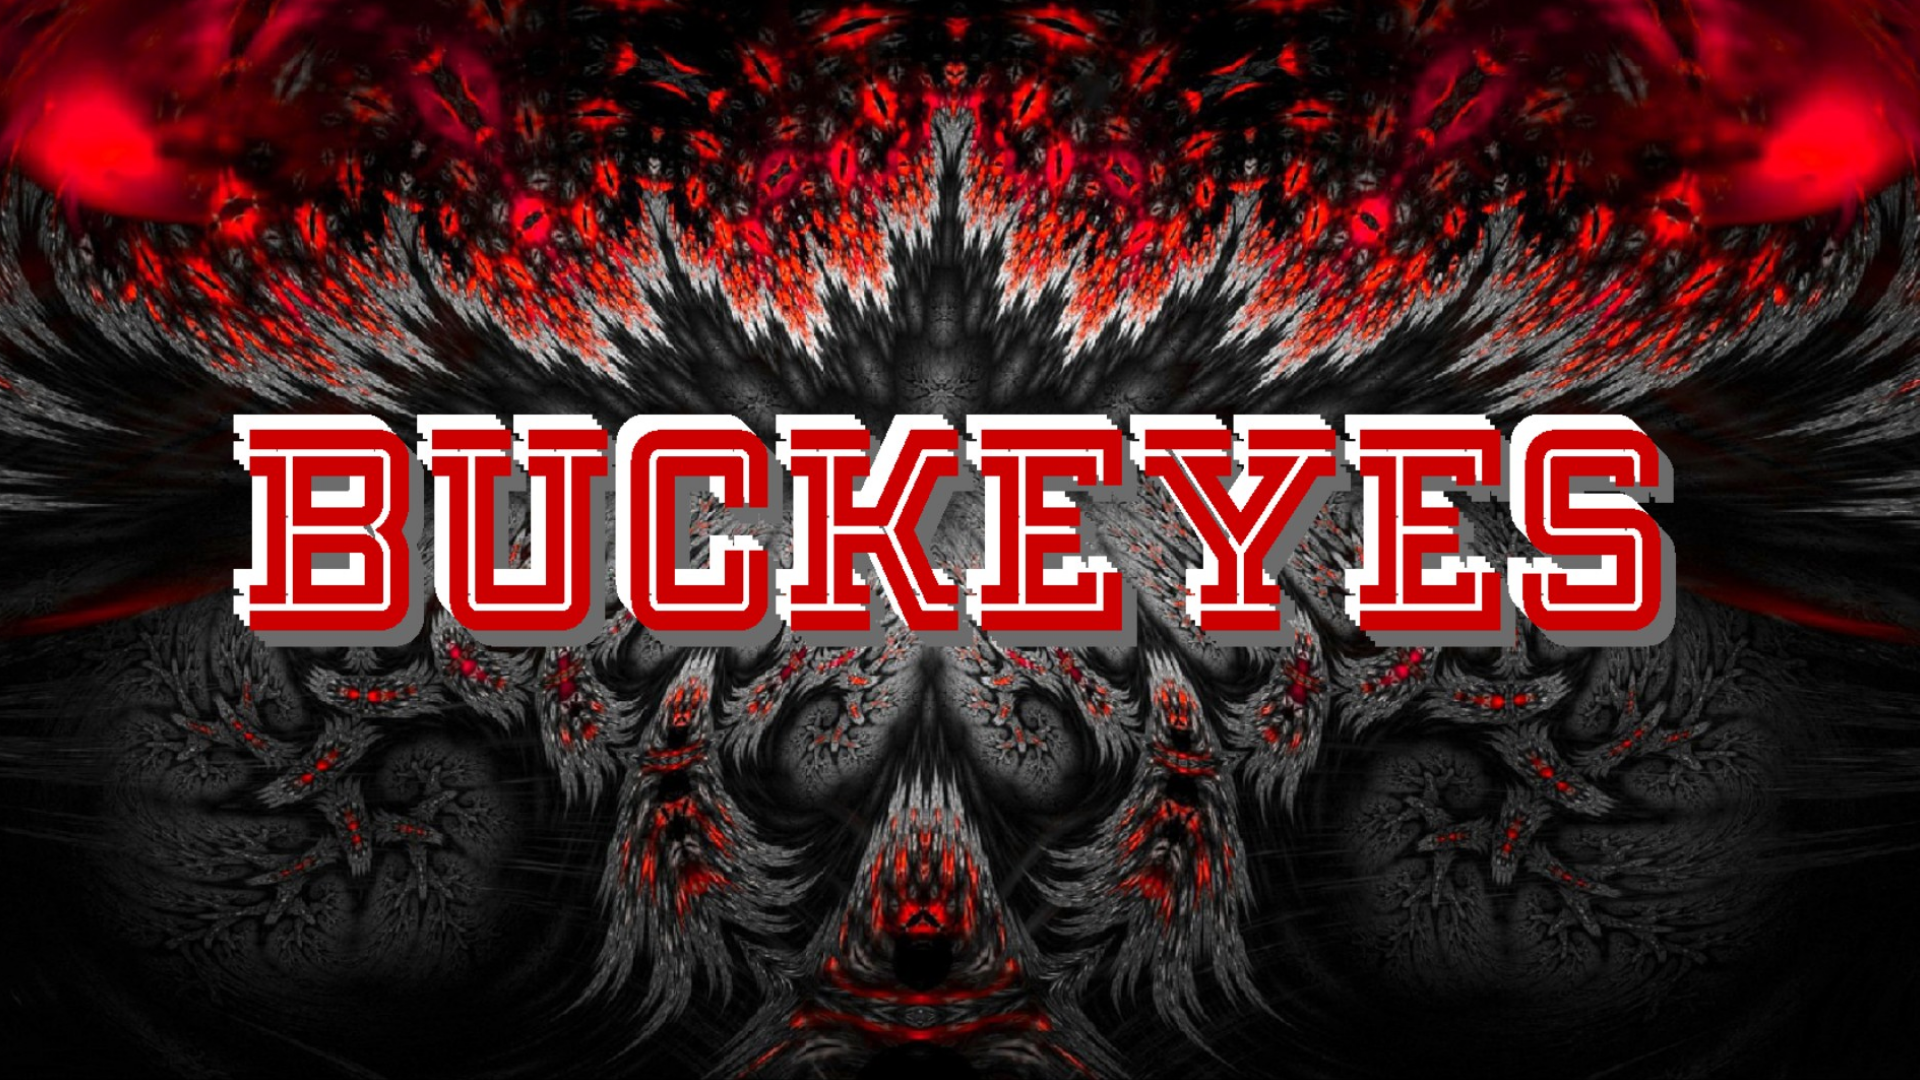 Ohio State Buckeyes Background On